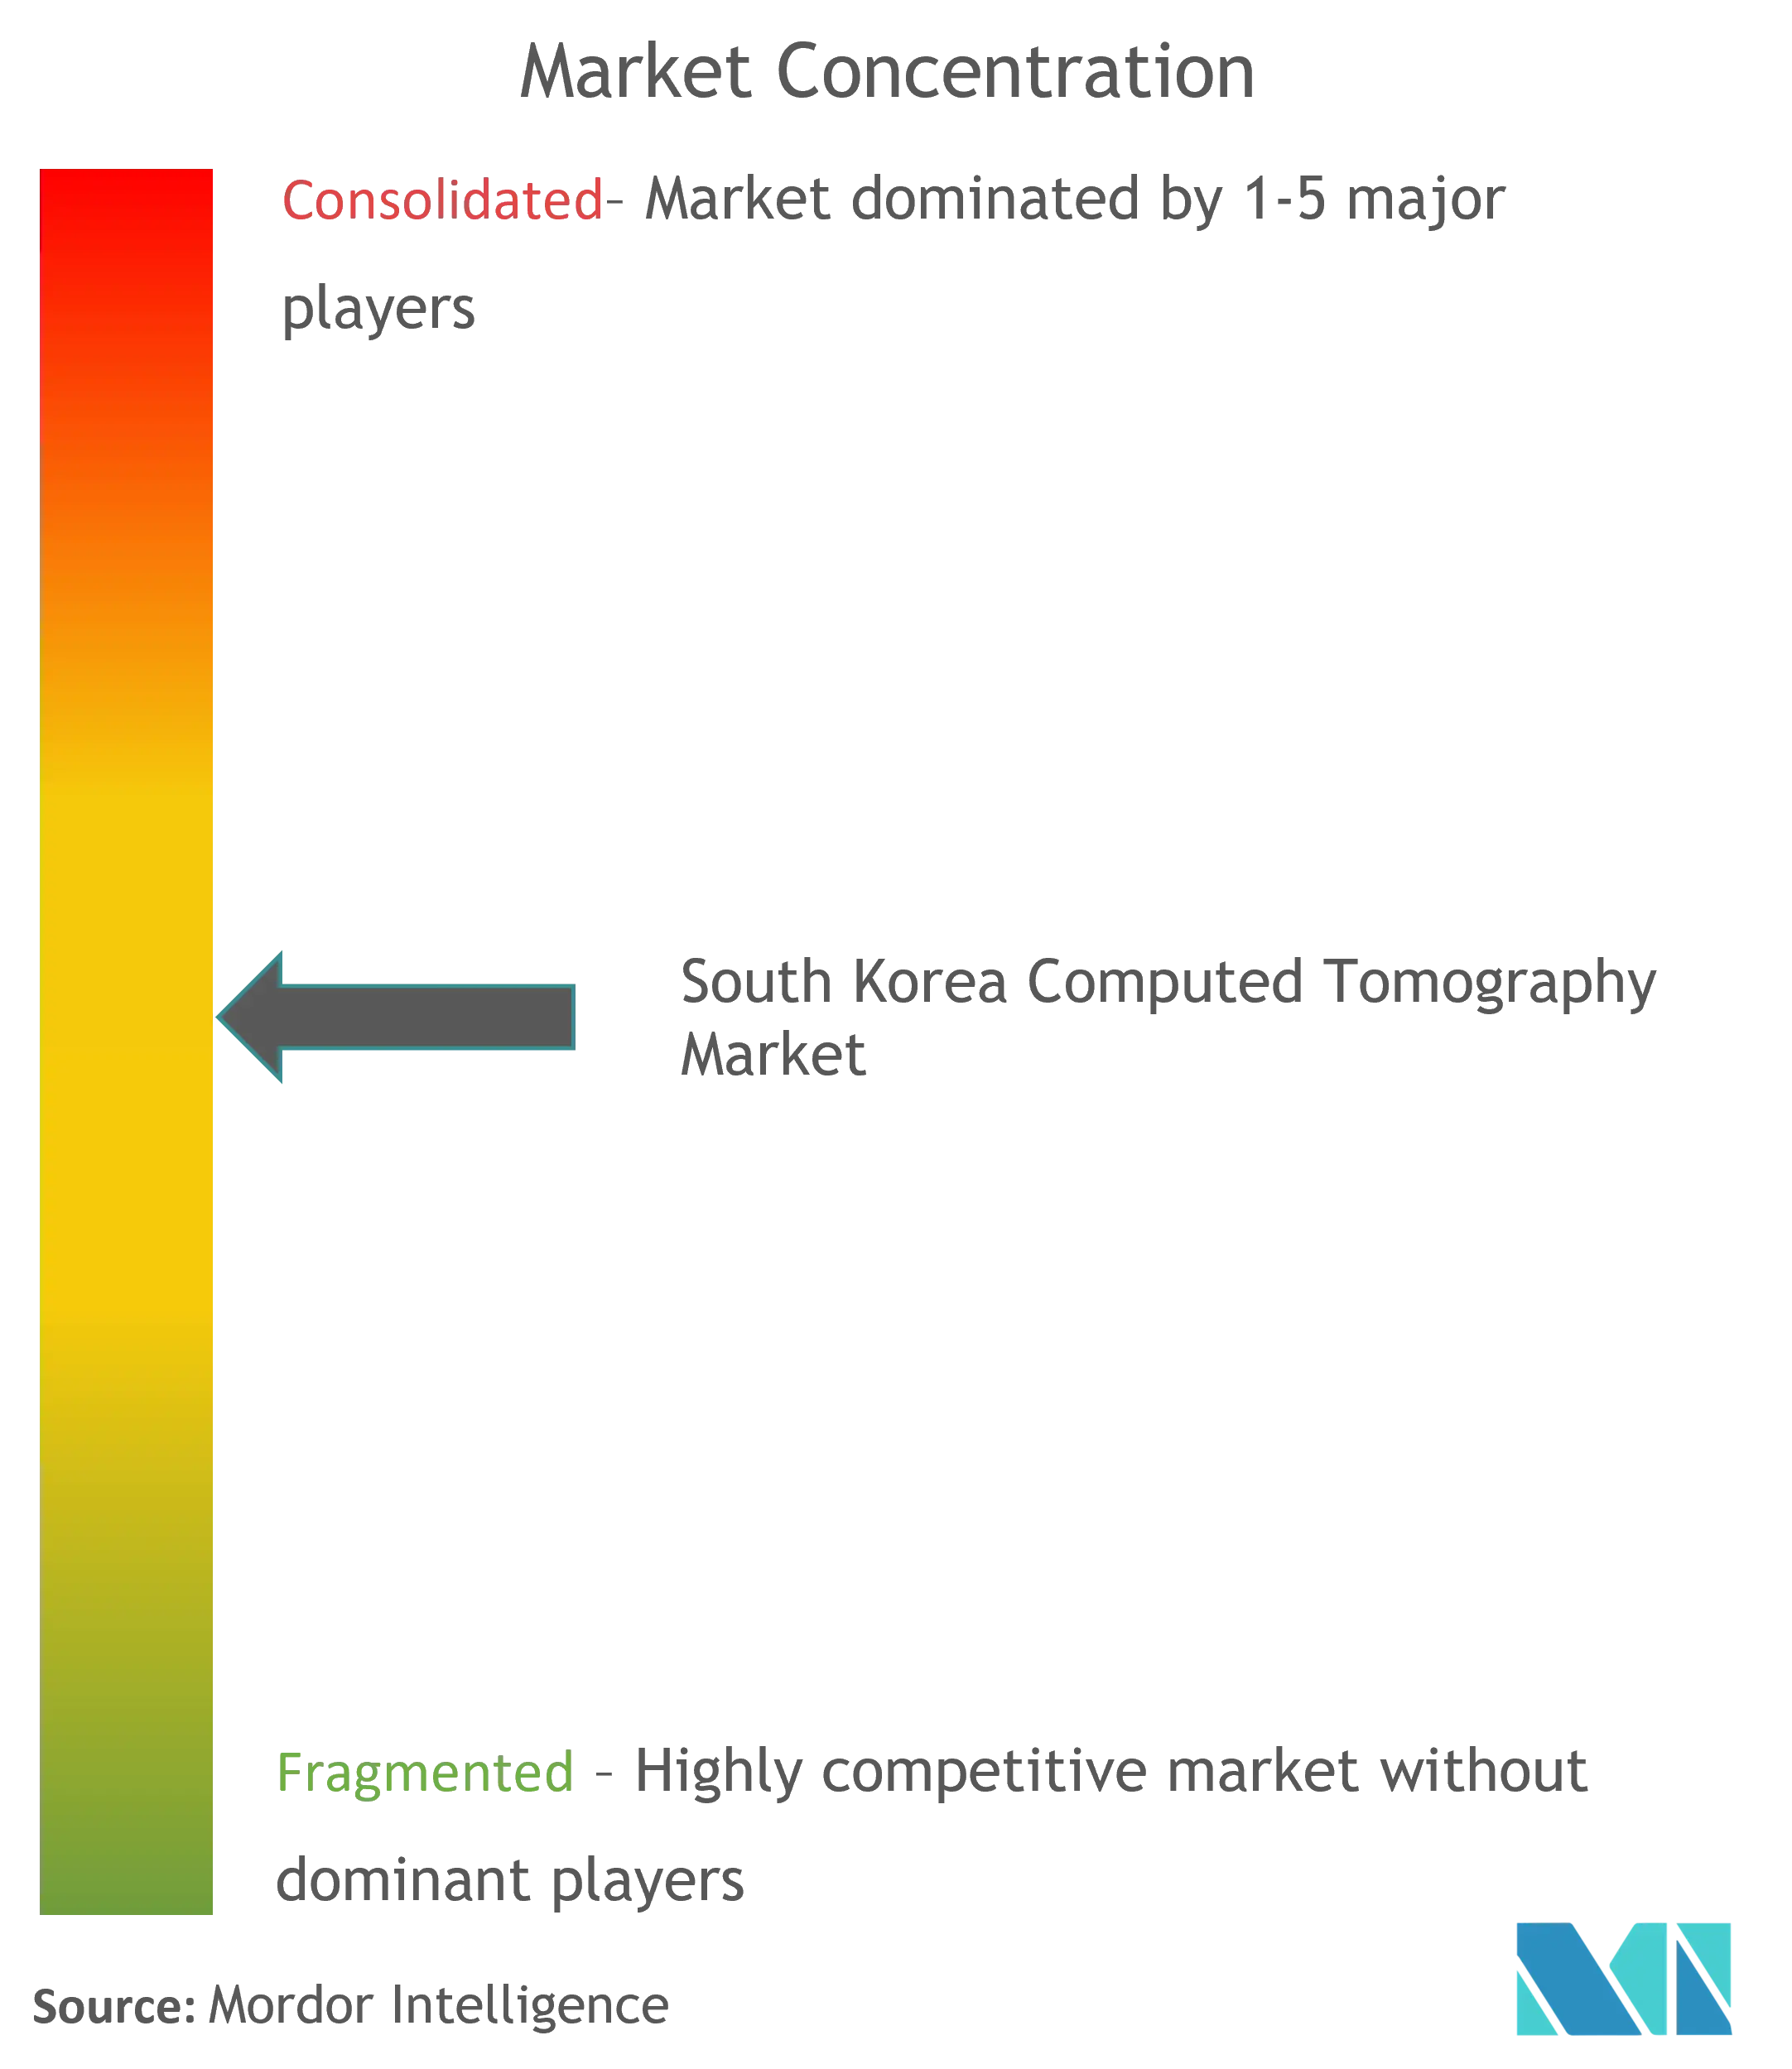 South Korea Computed Tomography Market Concentration